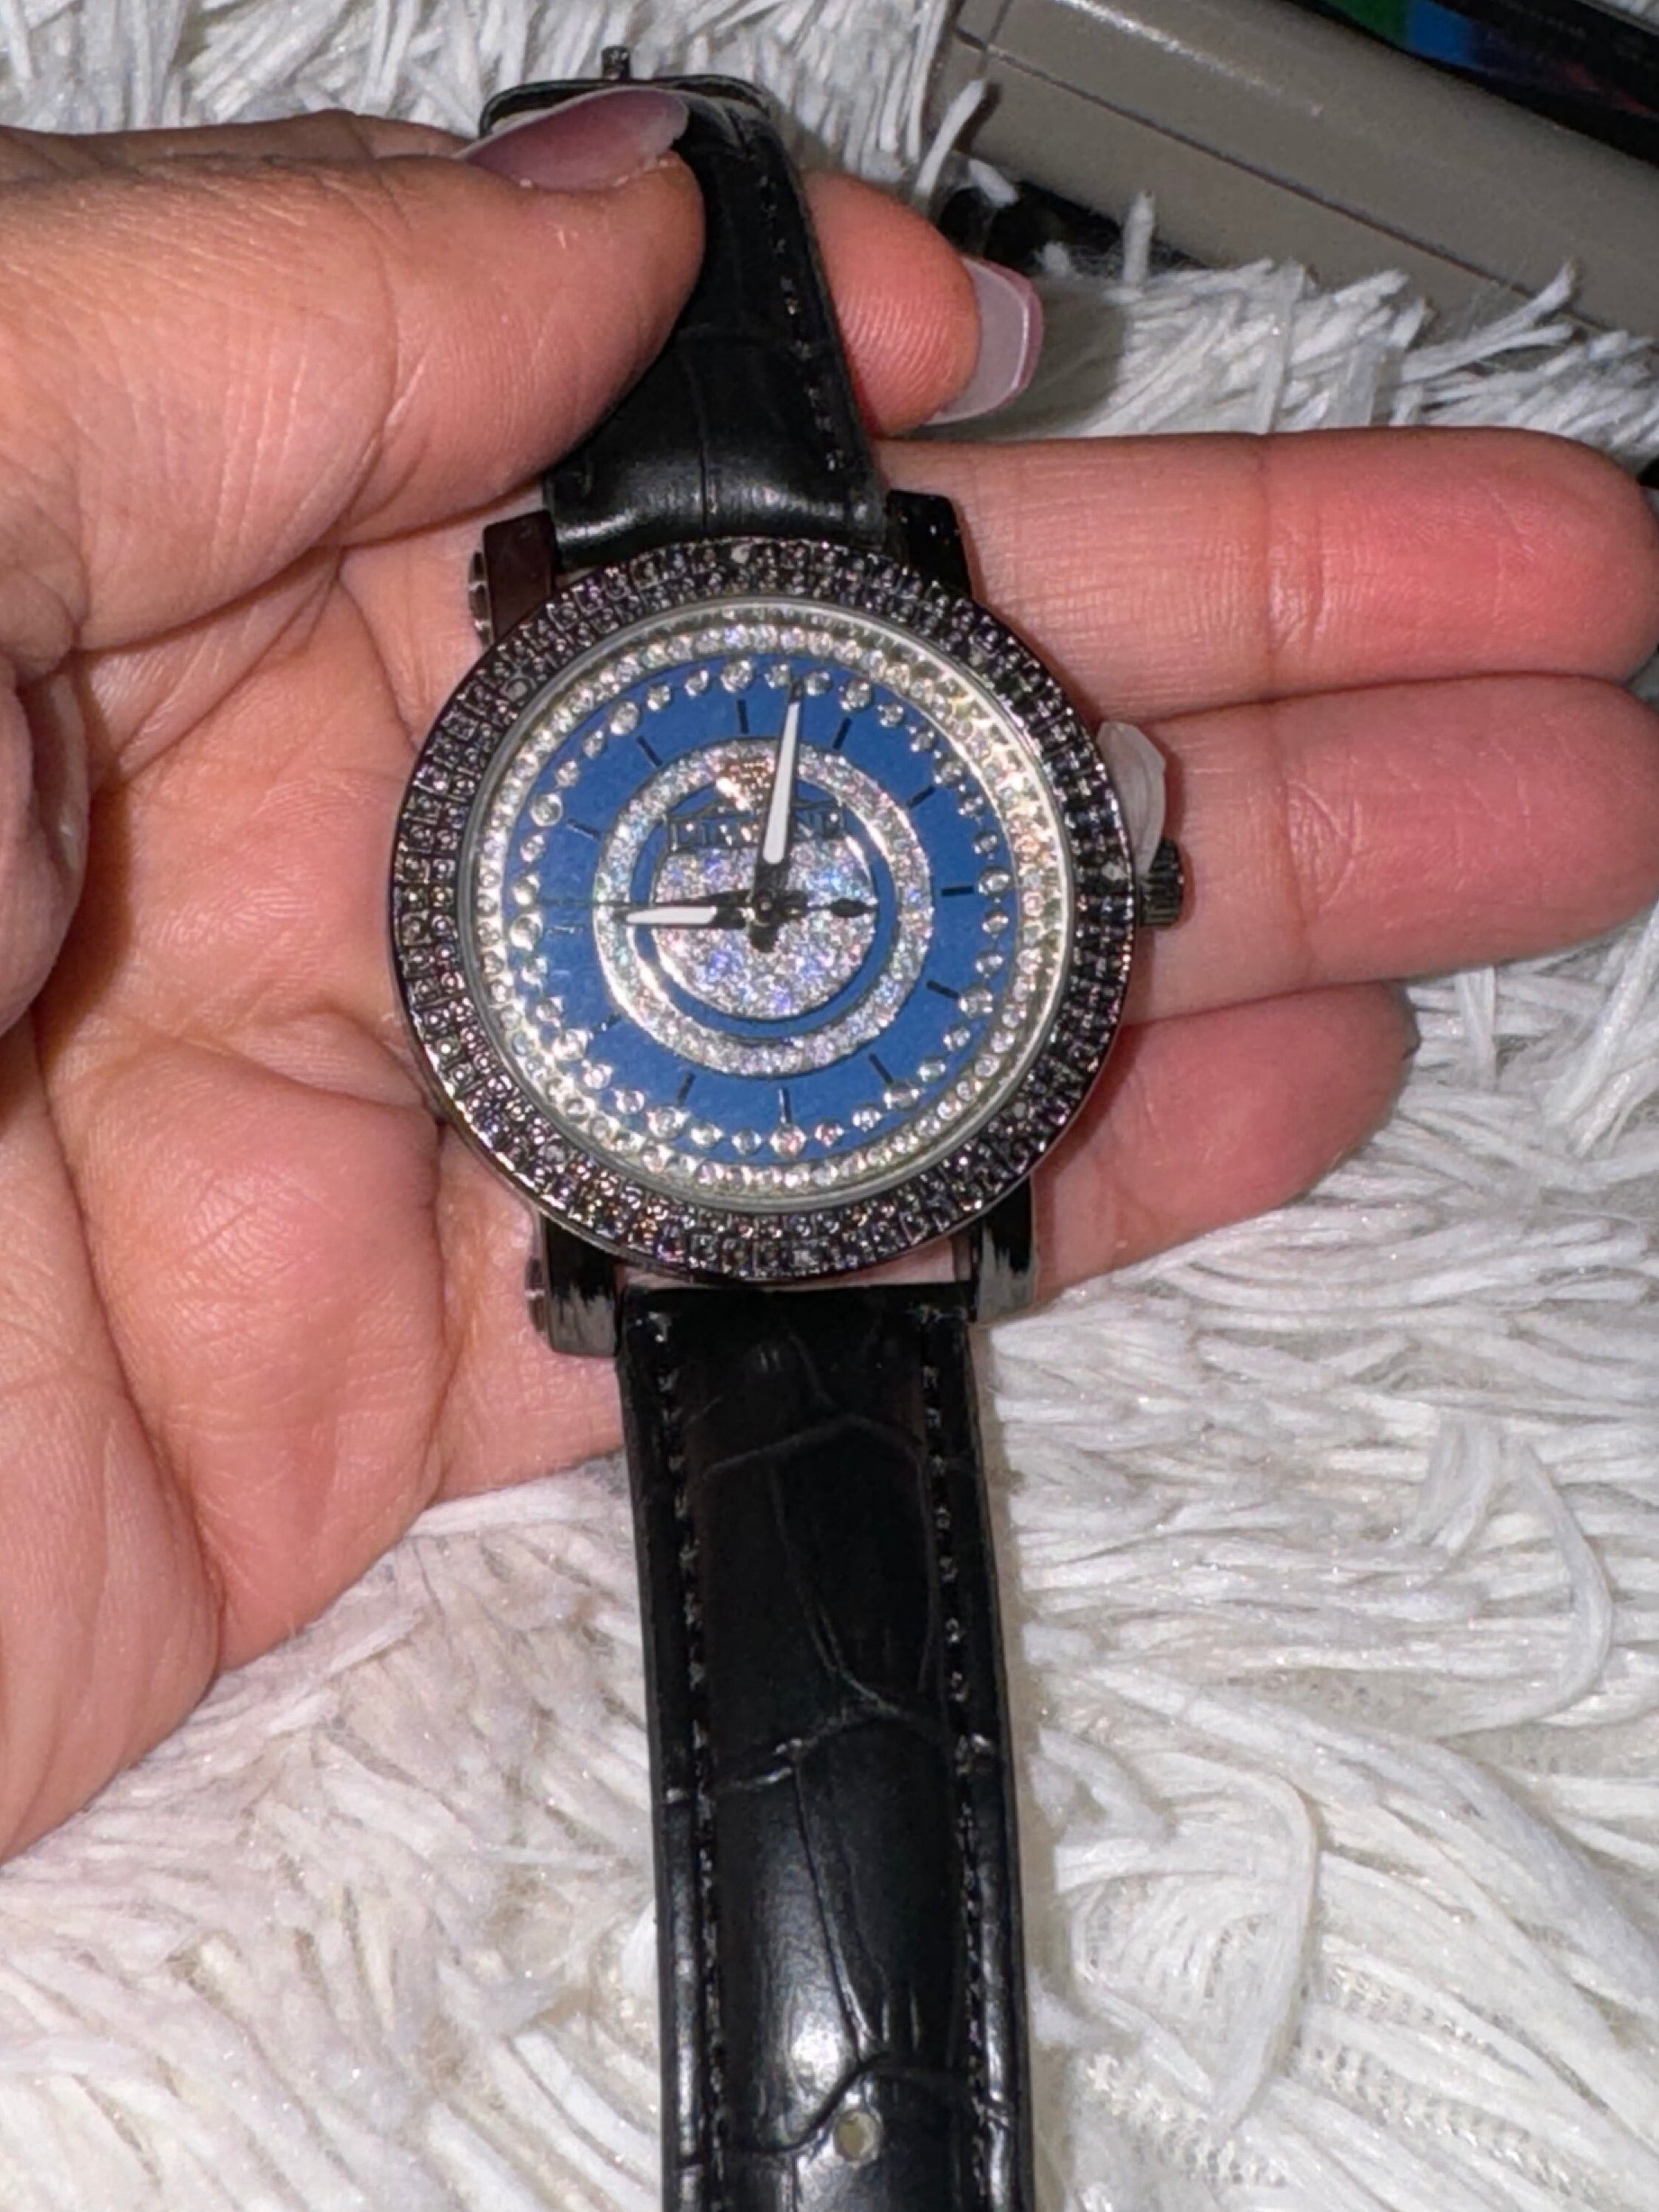 Real Diamond watch - Men's Diamond Watch - Genuine 1/10 Carat Natural Diamonds - Perfect Gift for Him, Anniversary, Birthday, Christmas Gift